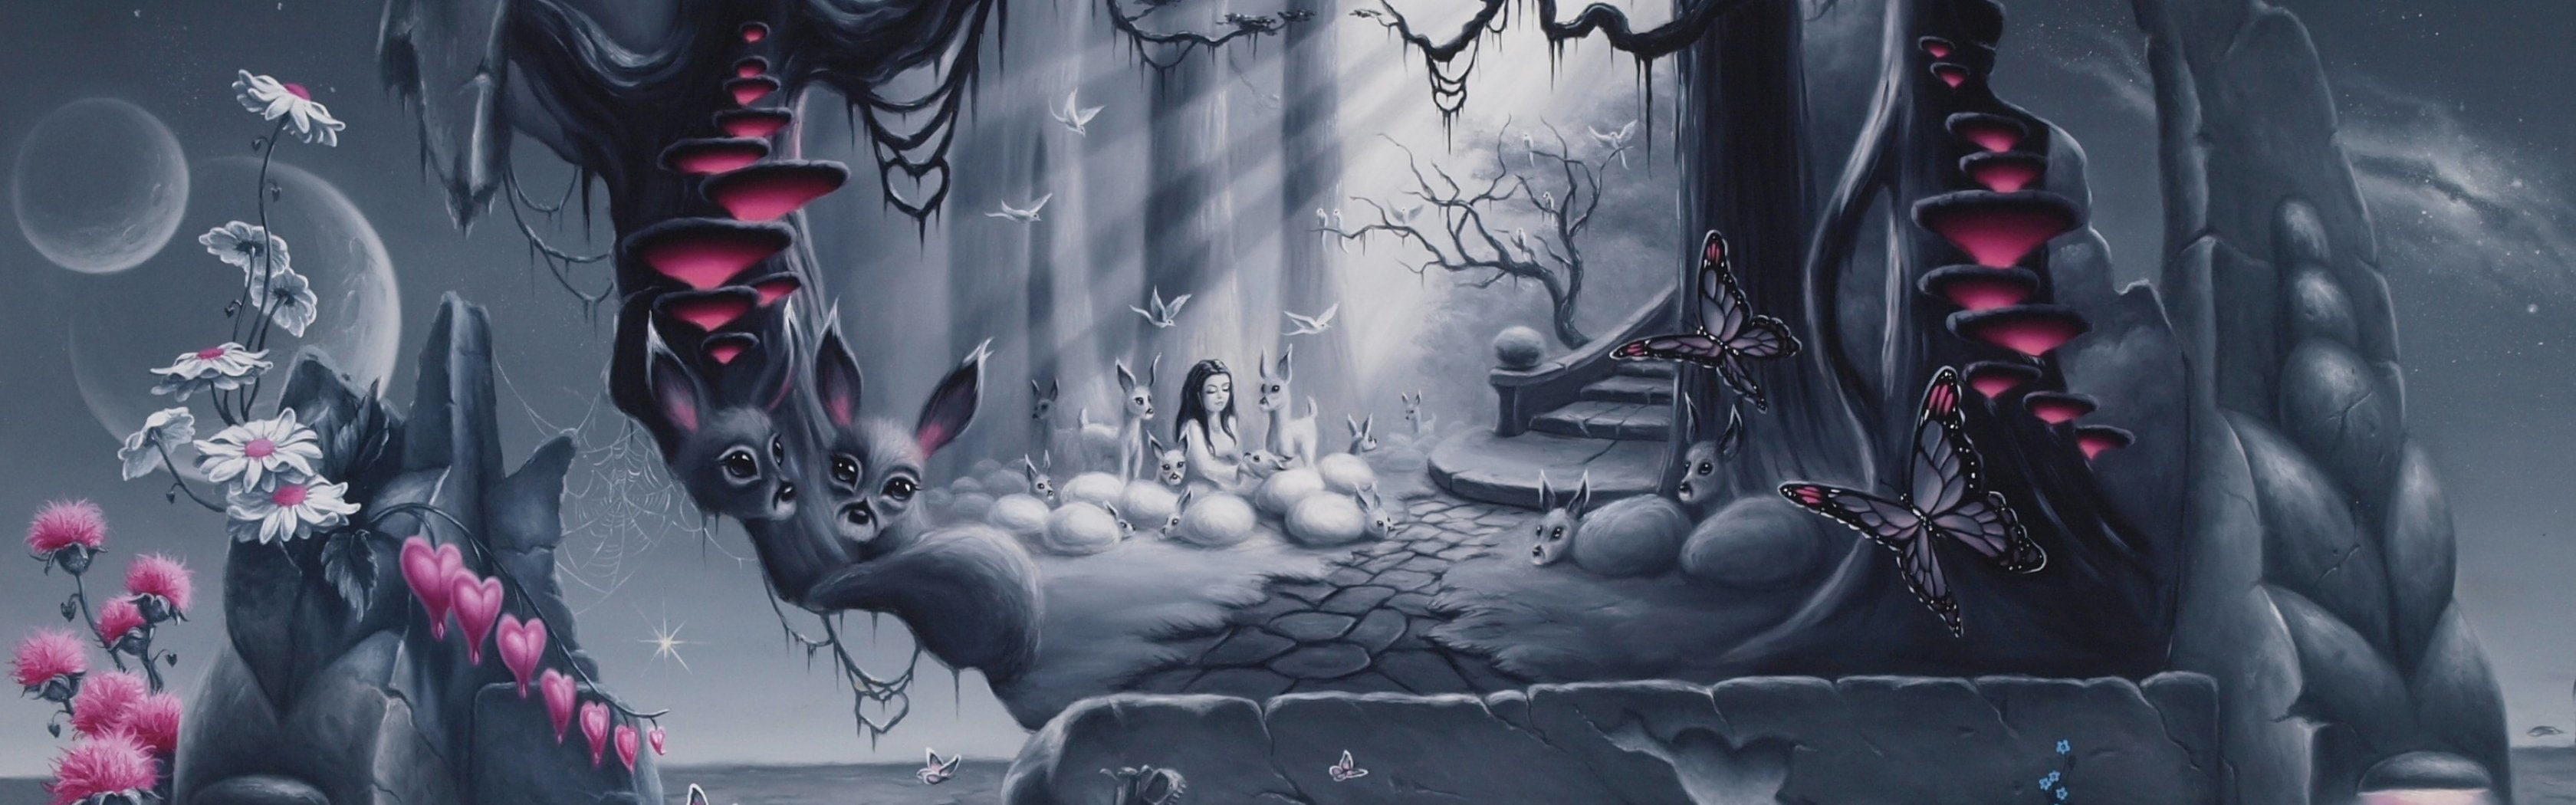 Dark Alice And Wonderland - HD Wallpaper 